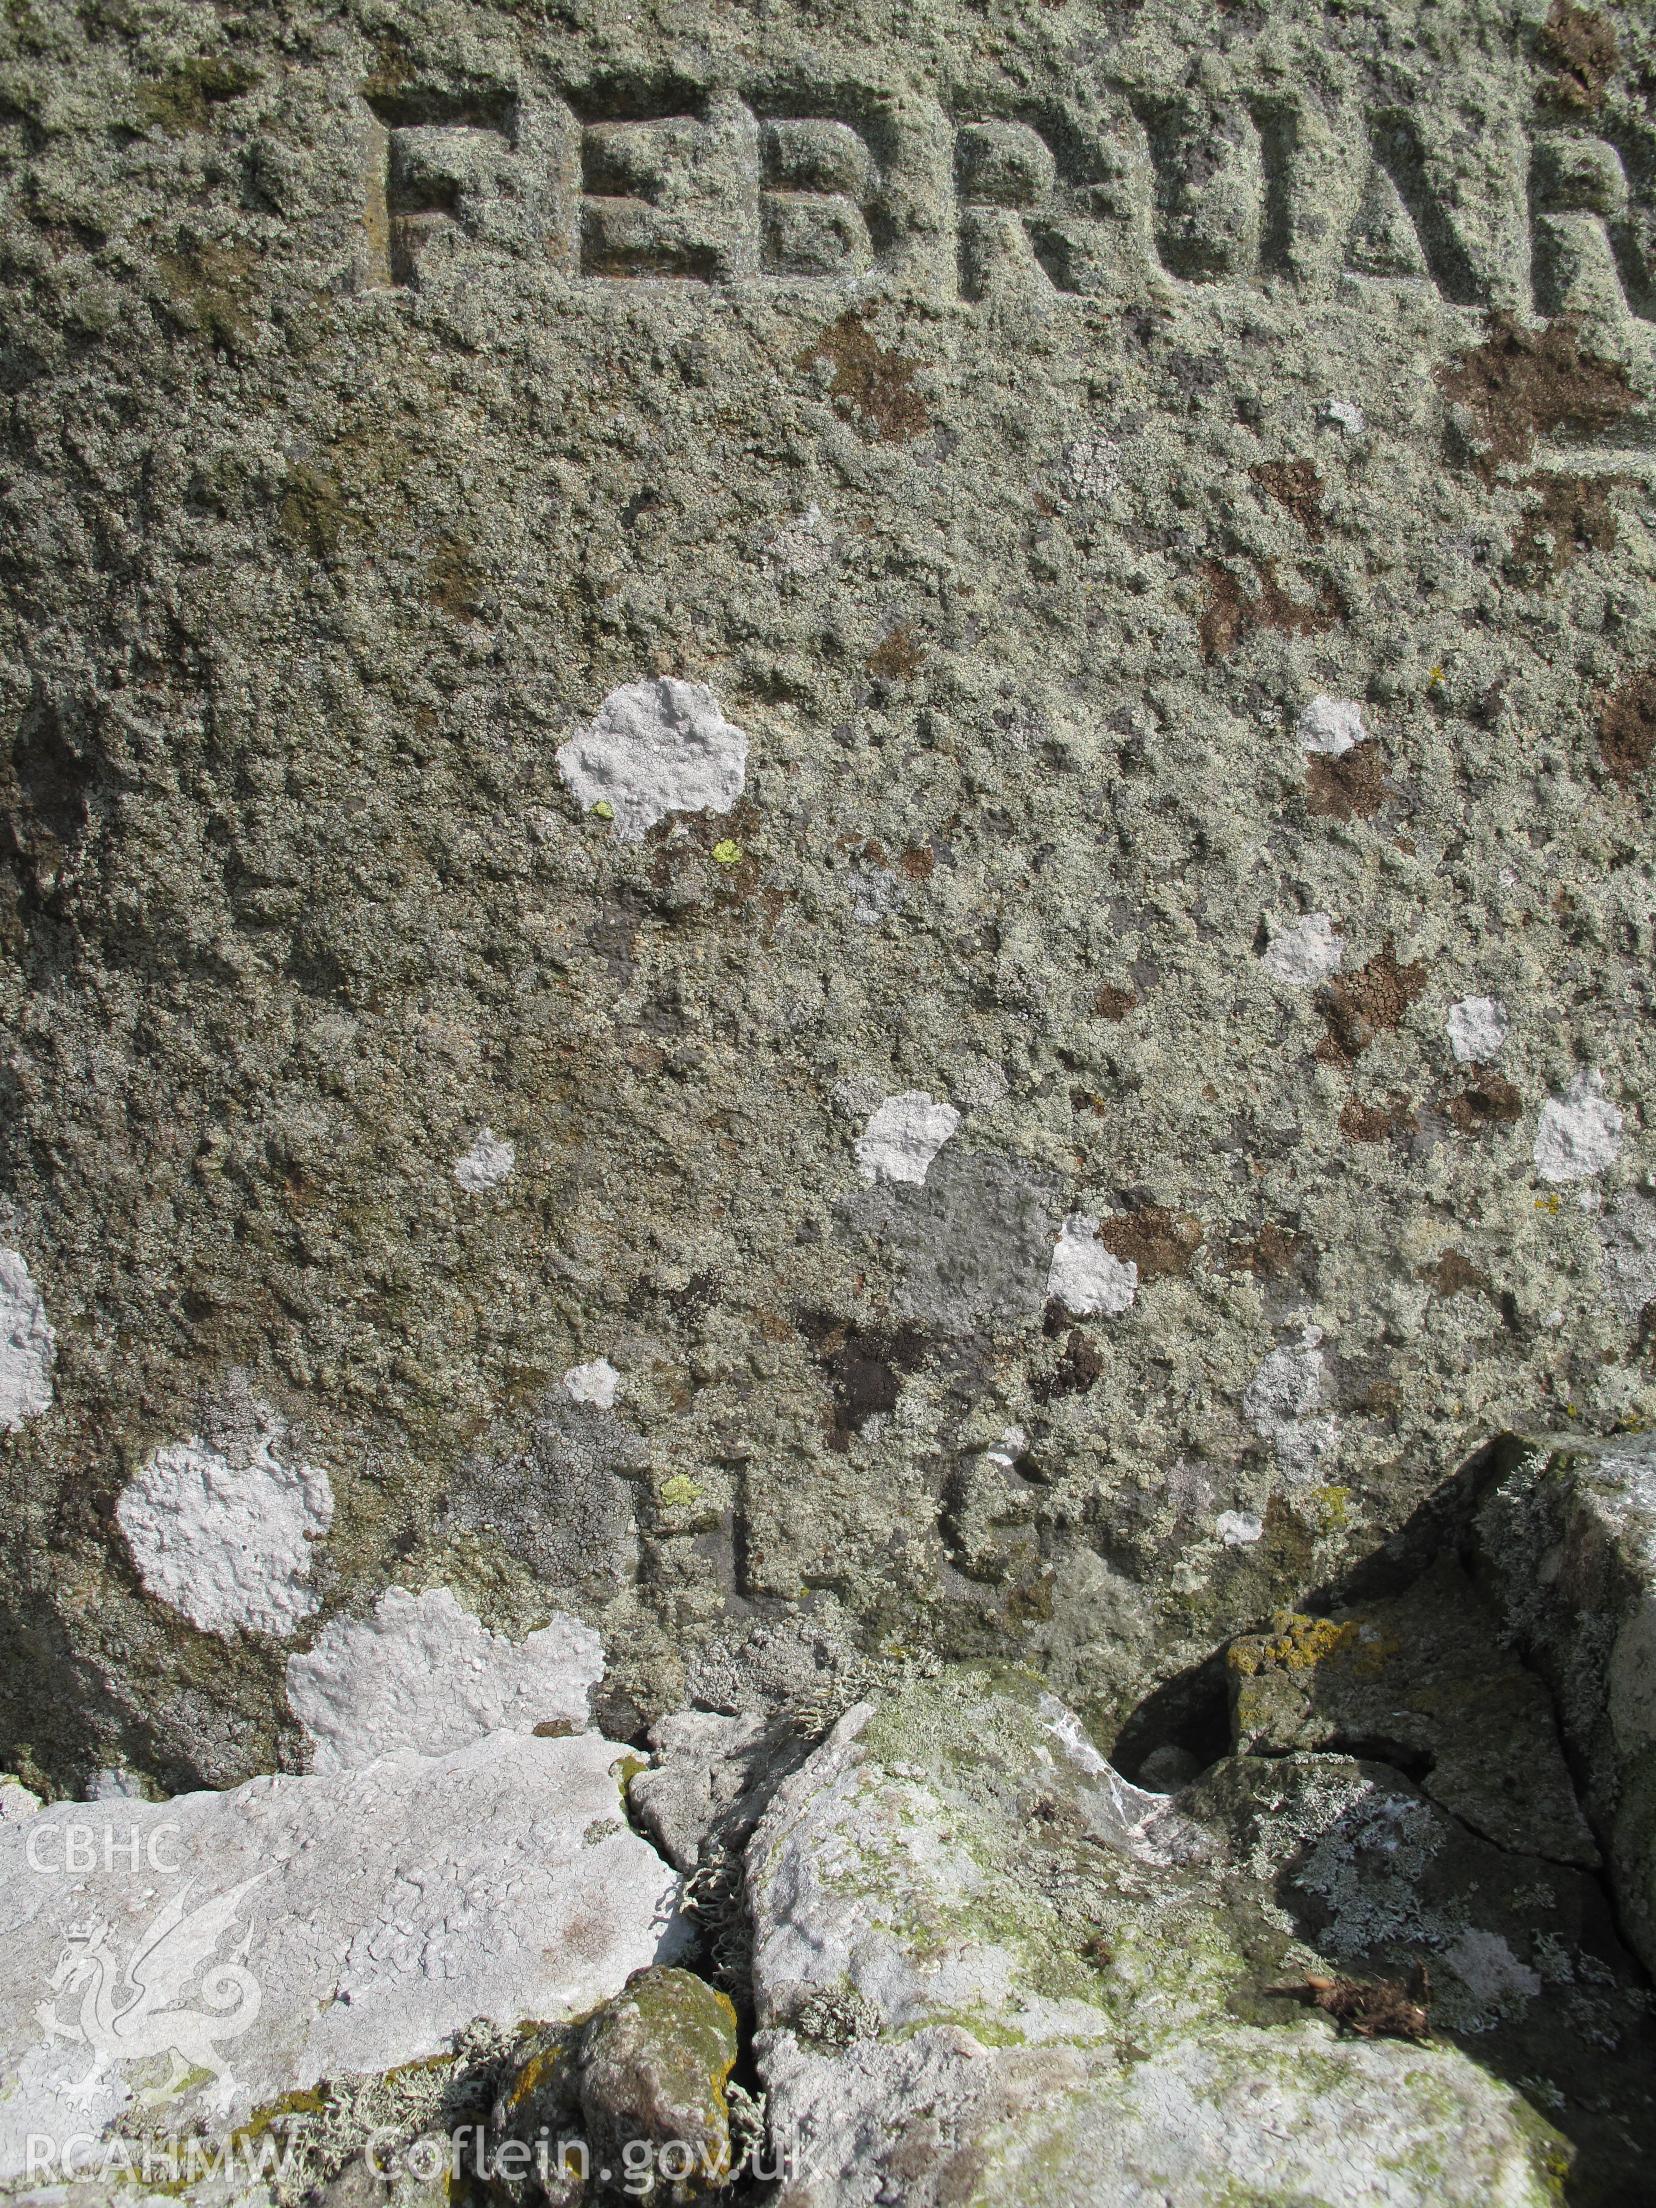 Detail of Carreg Goffa inscription: stonemason's initials?